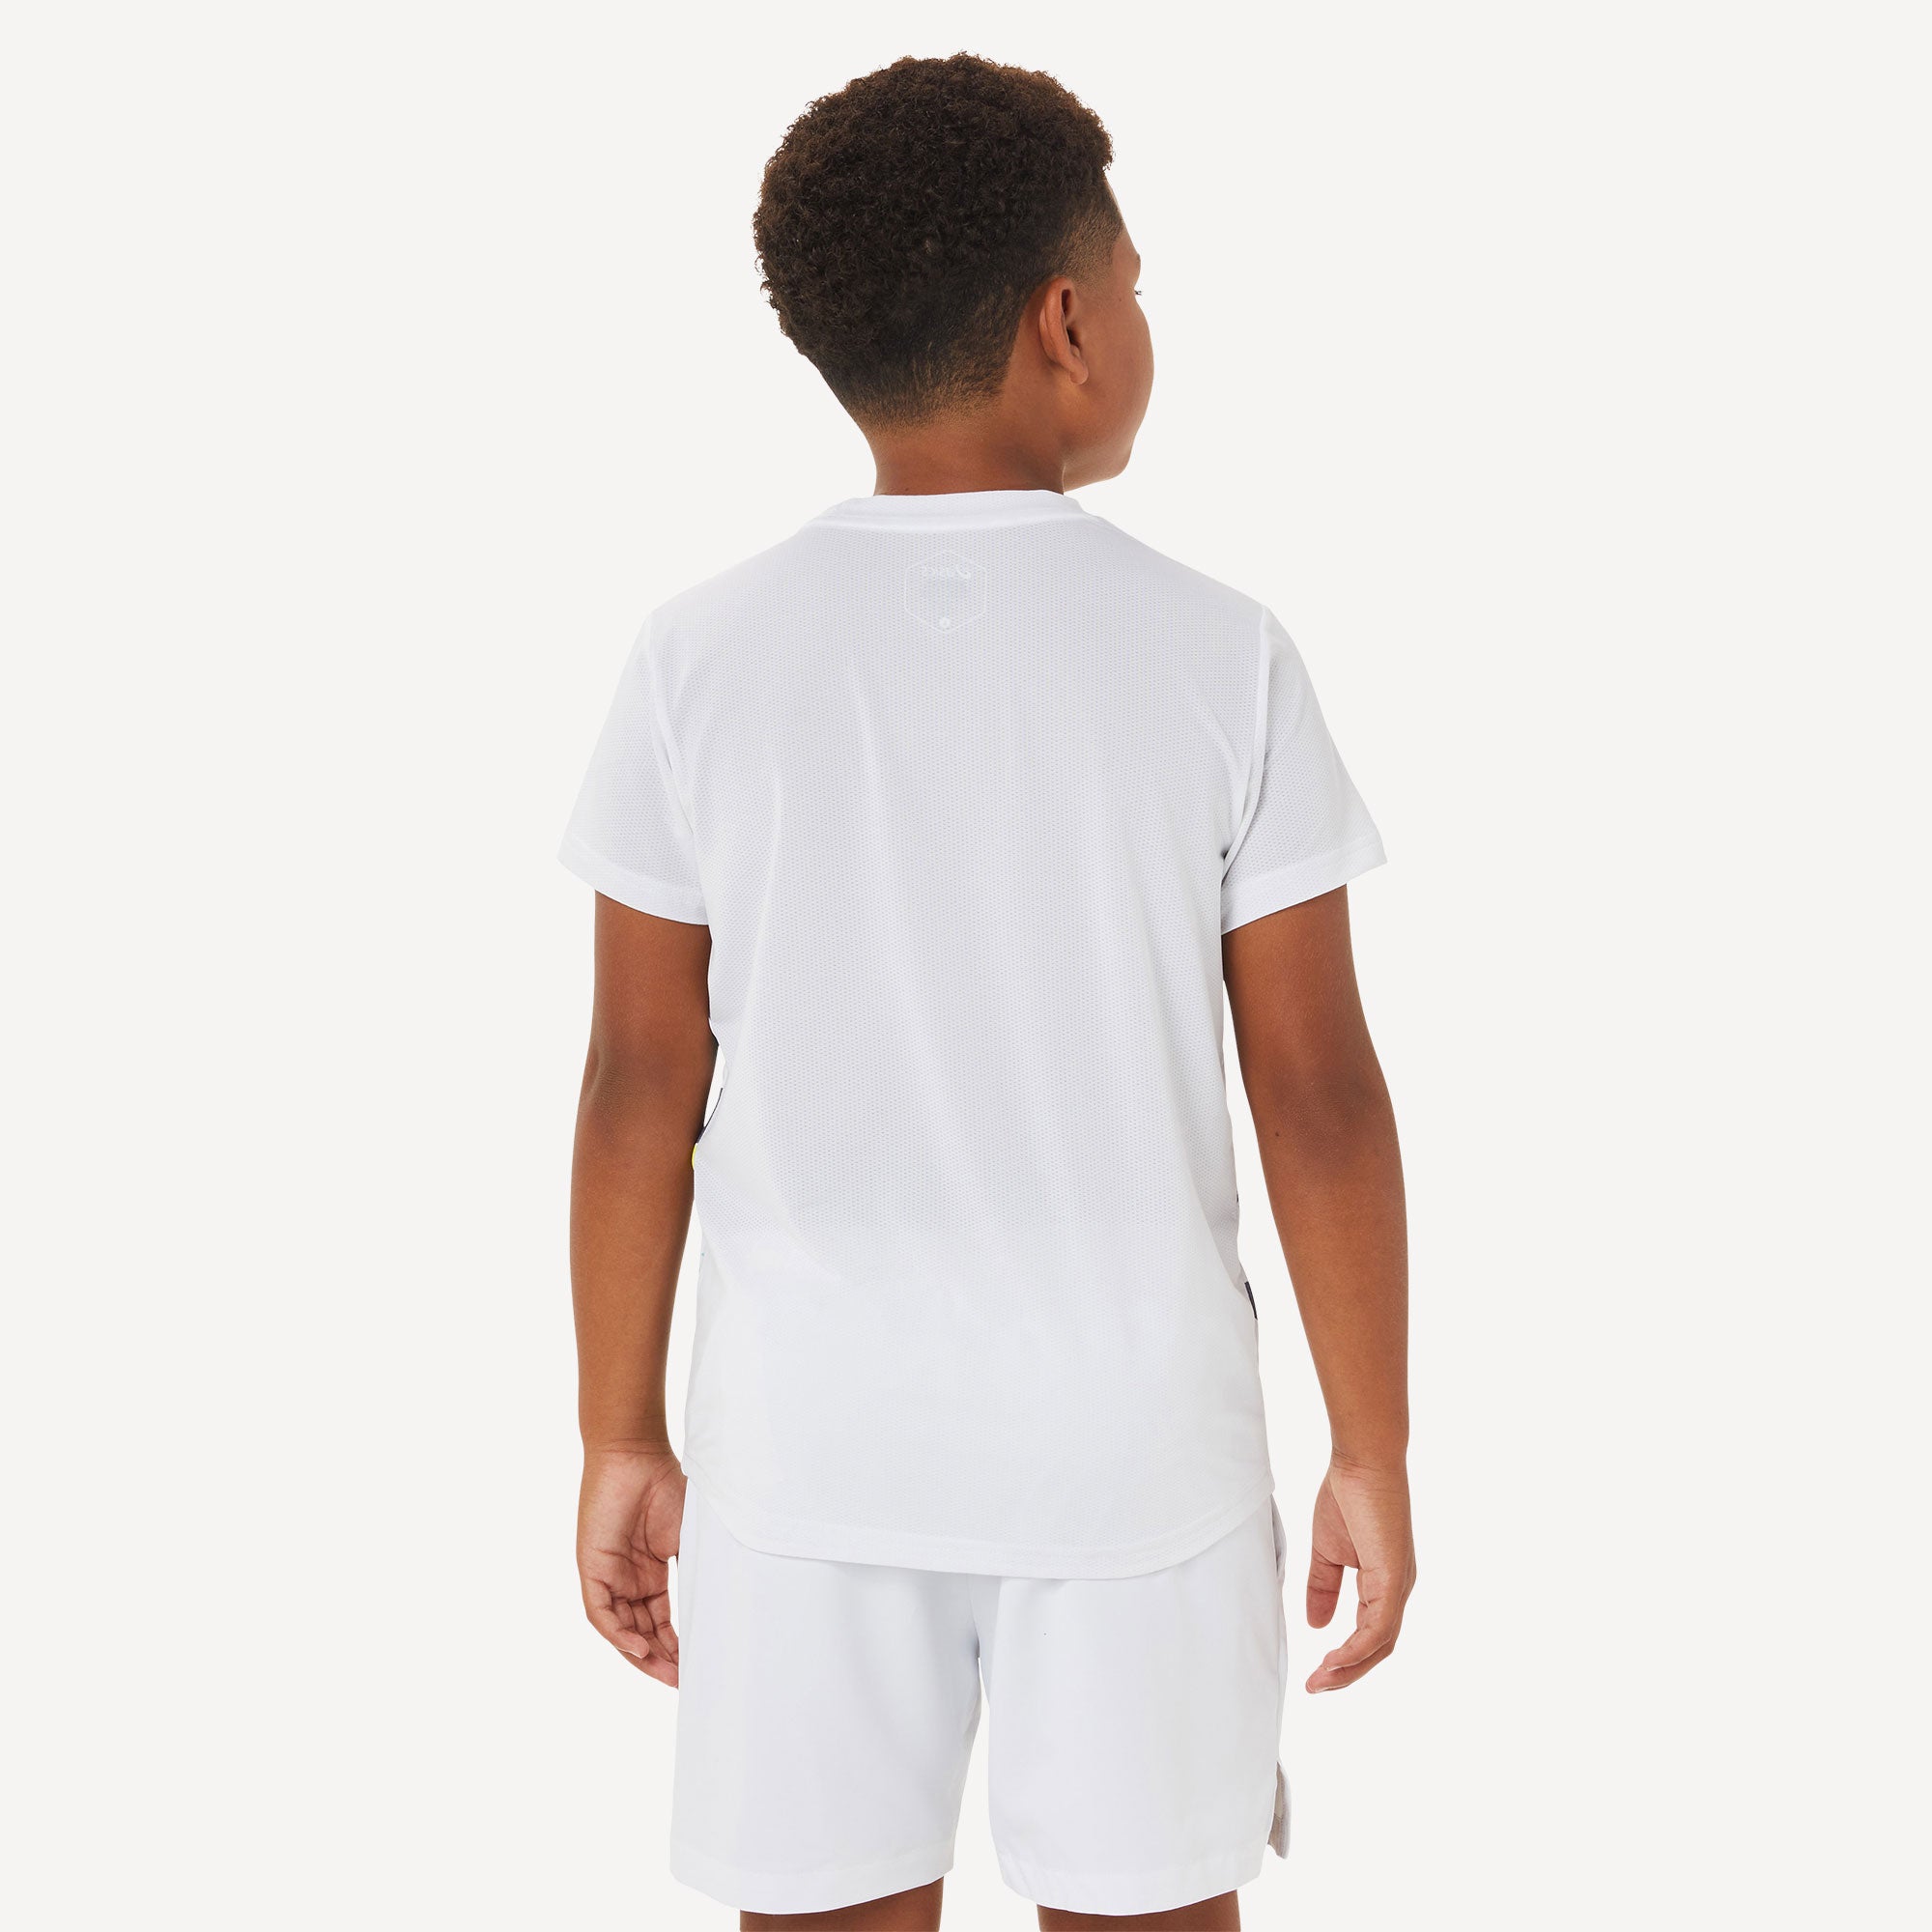 ASICS Boys' Tennis Shirt White (2)